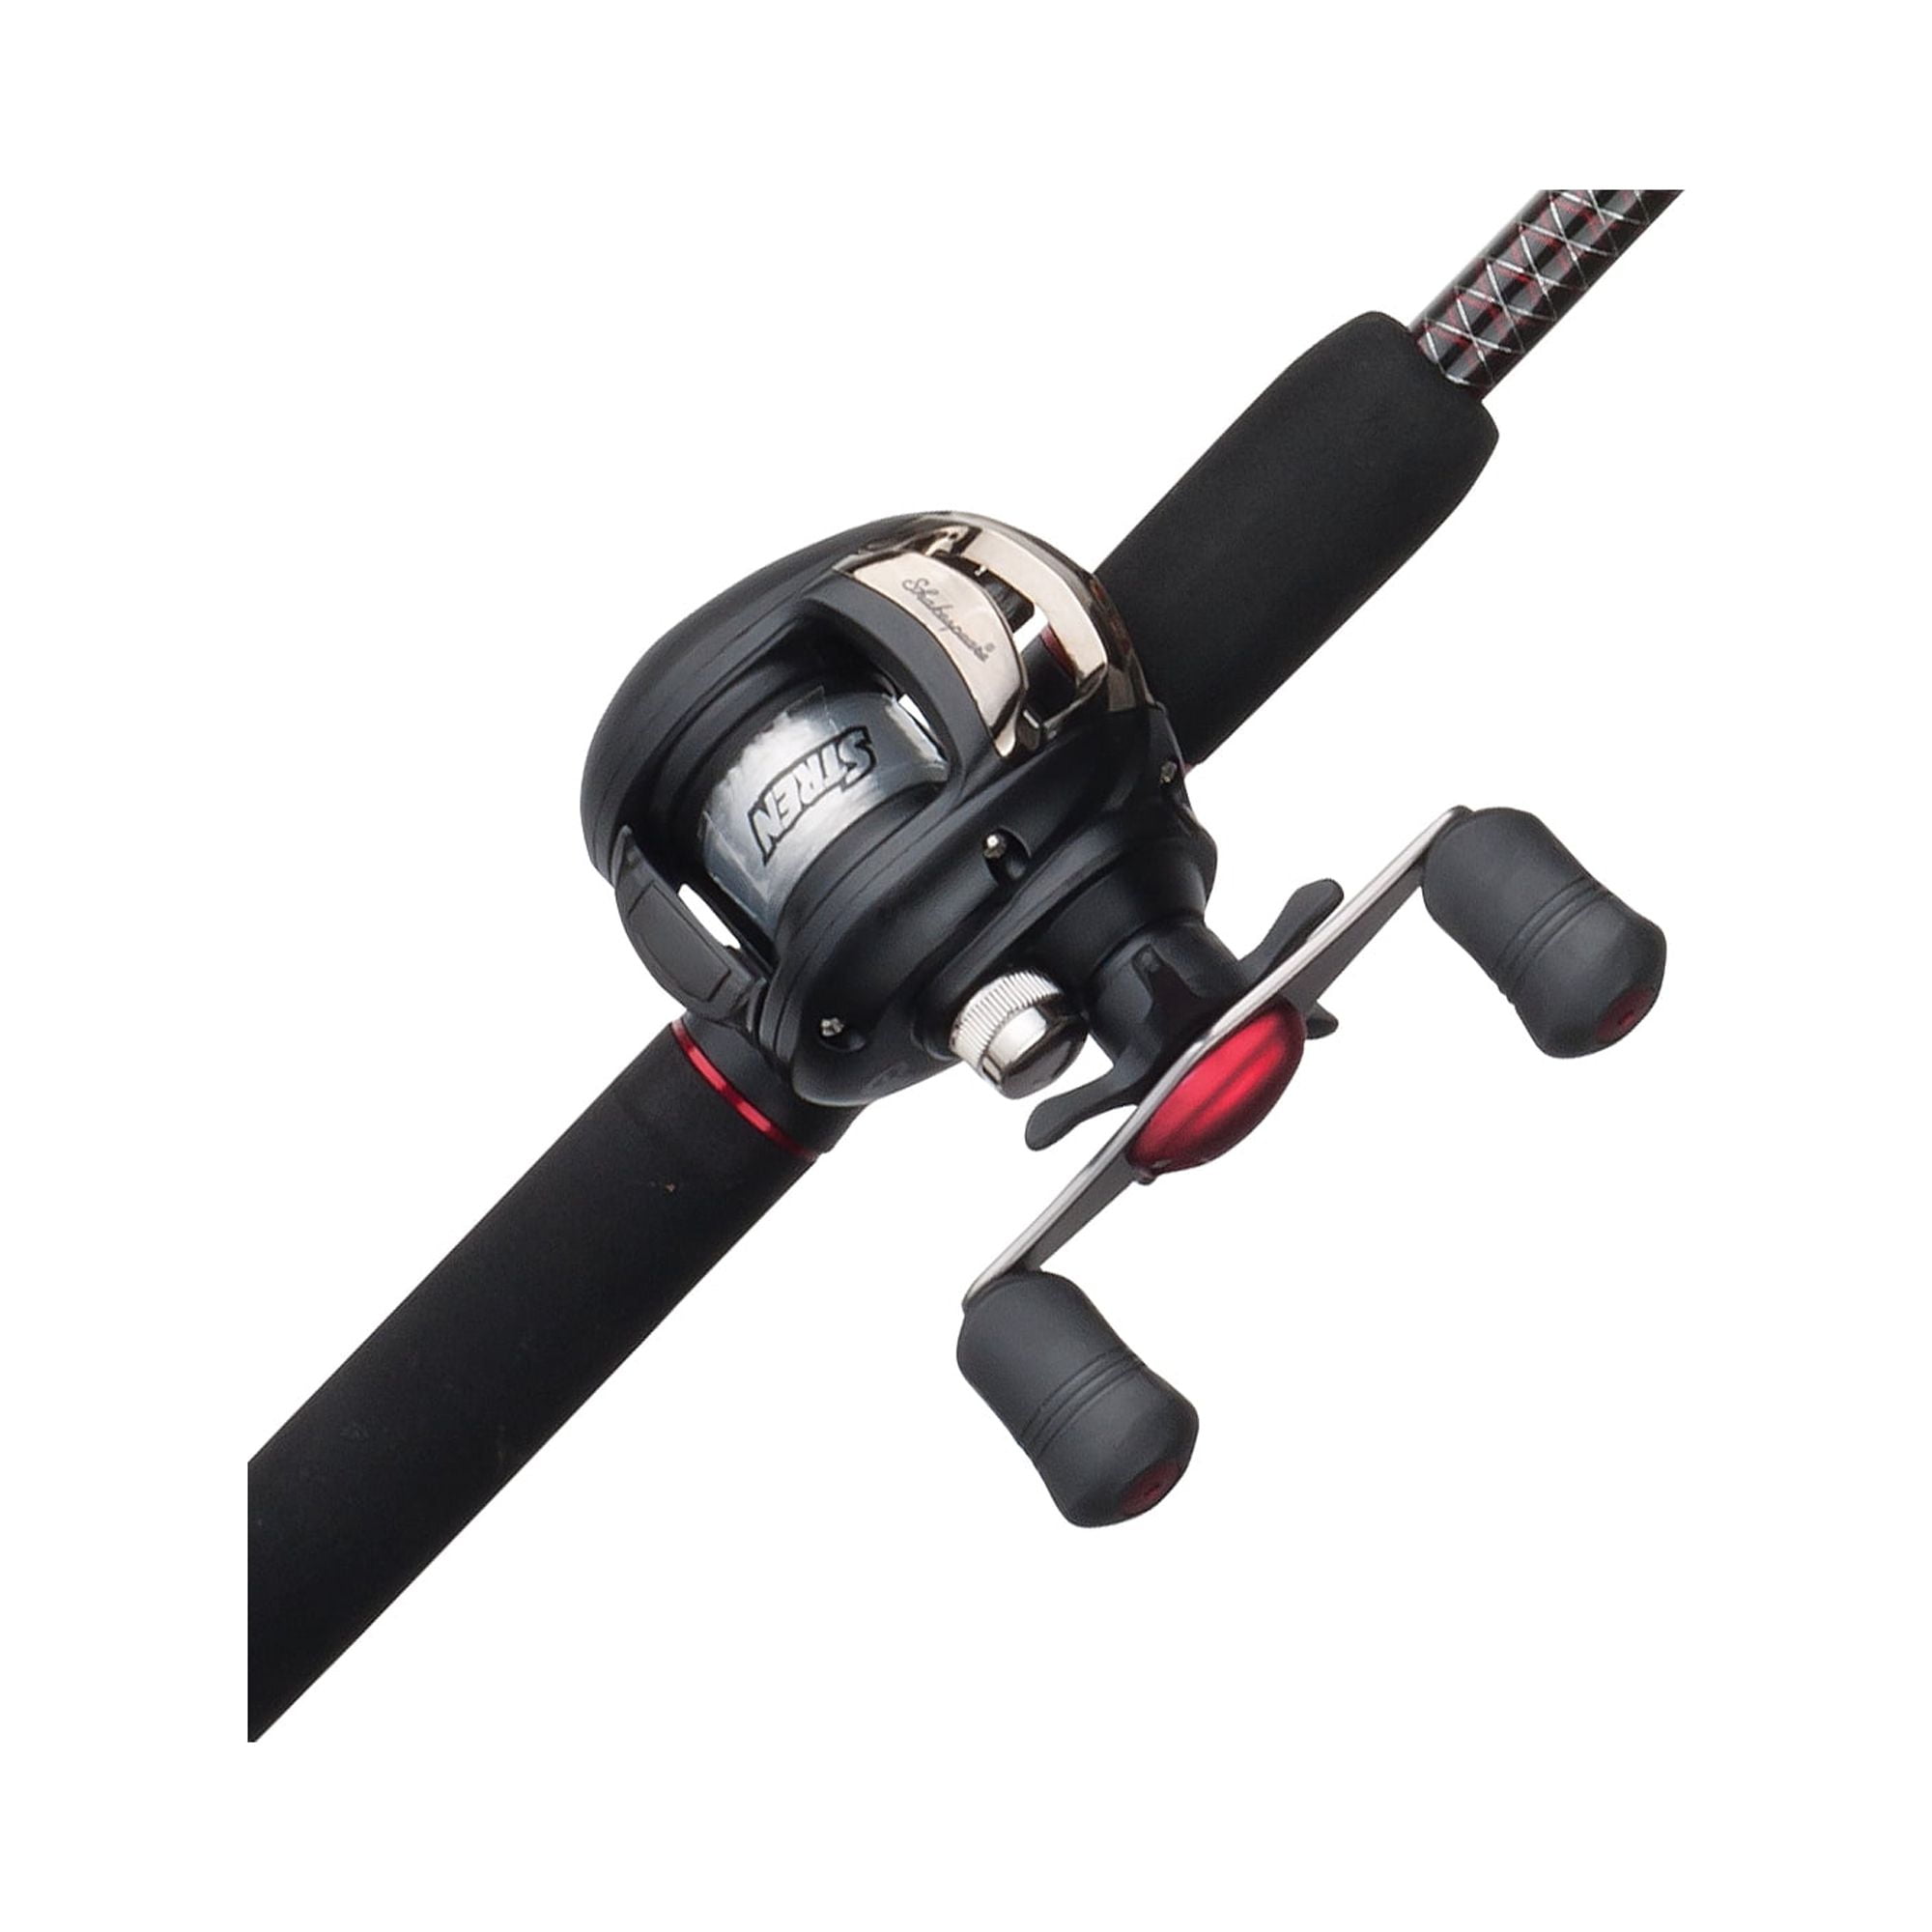 Ugly Stik 6’6” GX2 Baitcast Fishing Rod and Reel Casting Combo